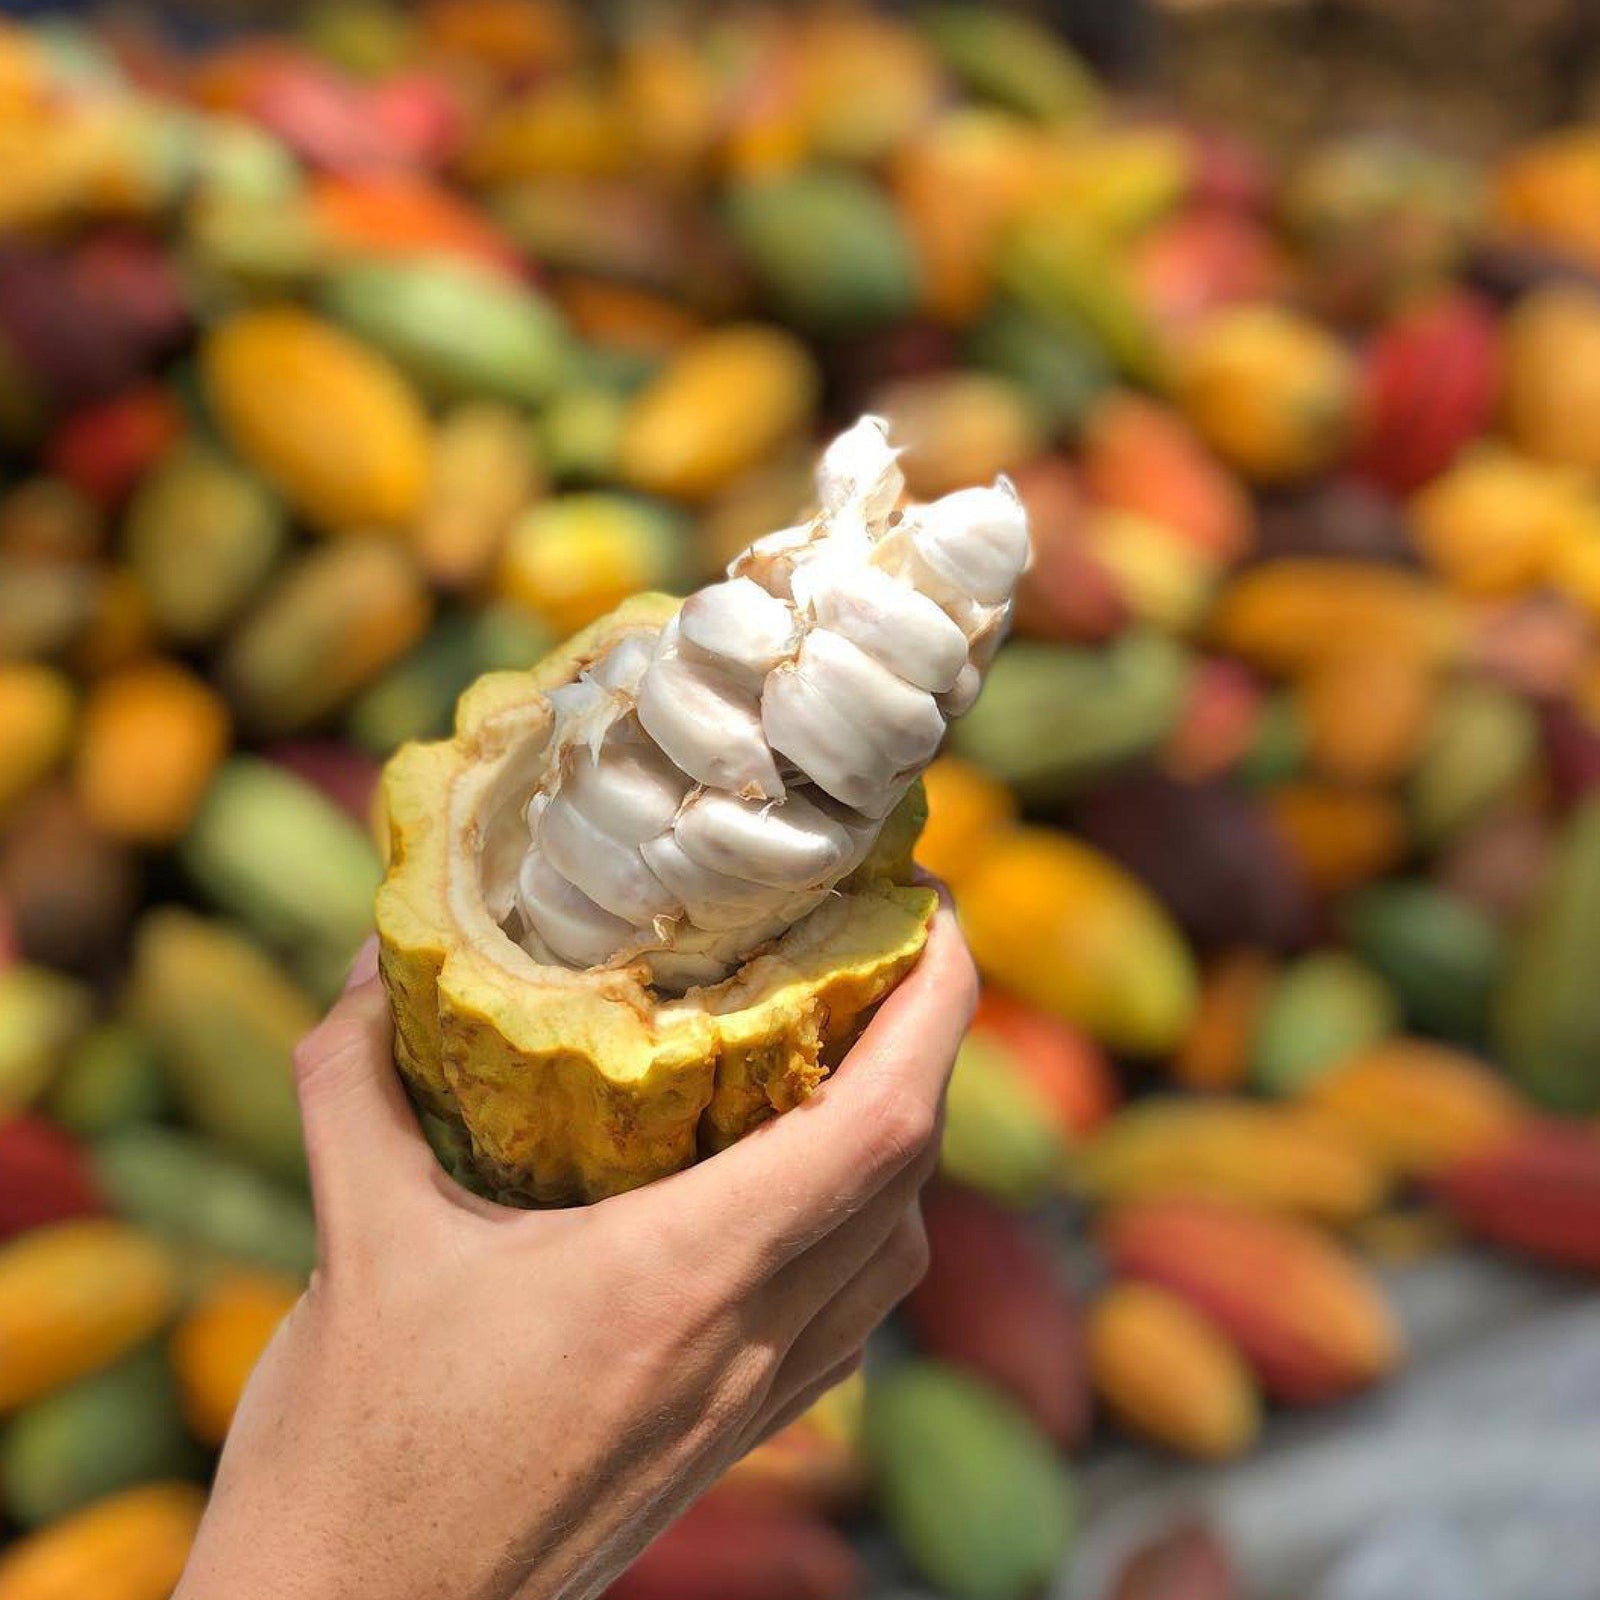 Maui Cacao – The Harvesting Process